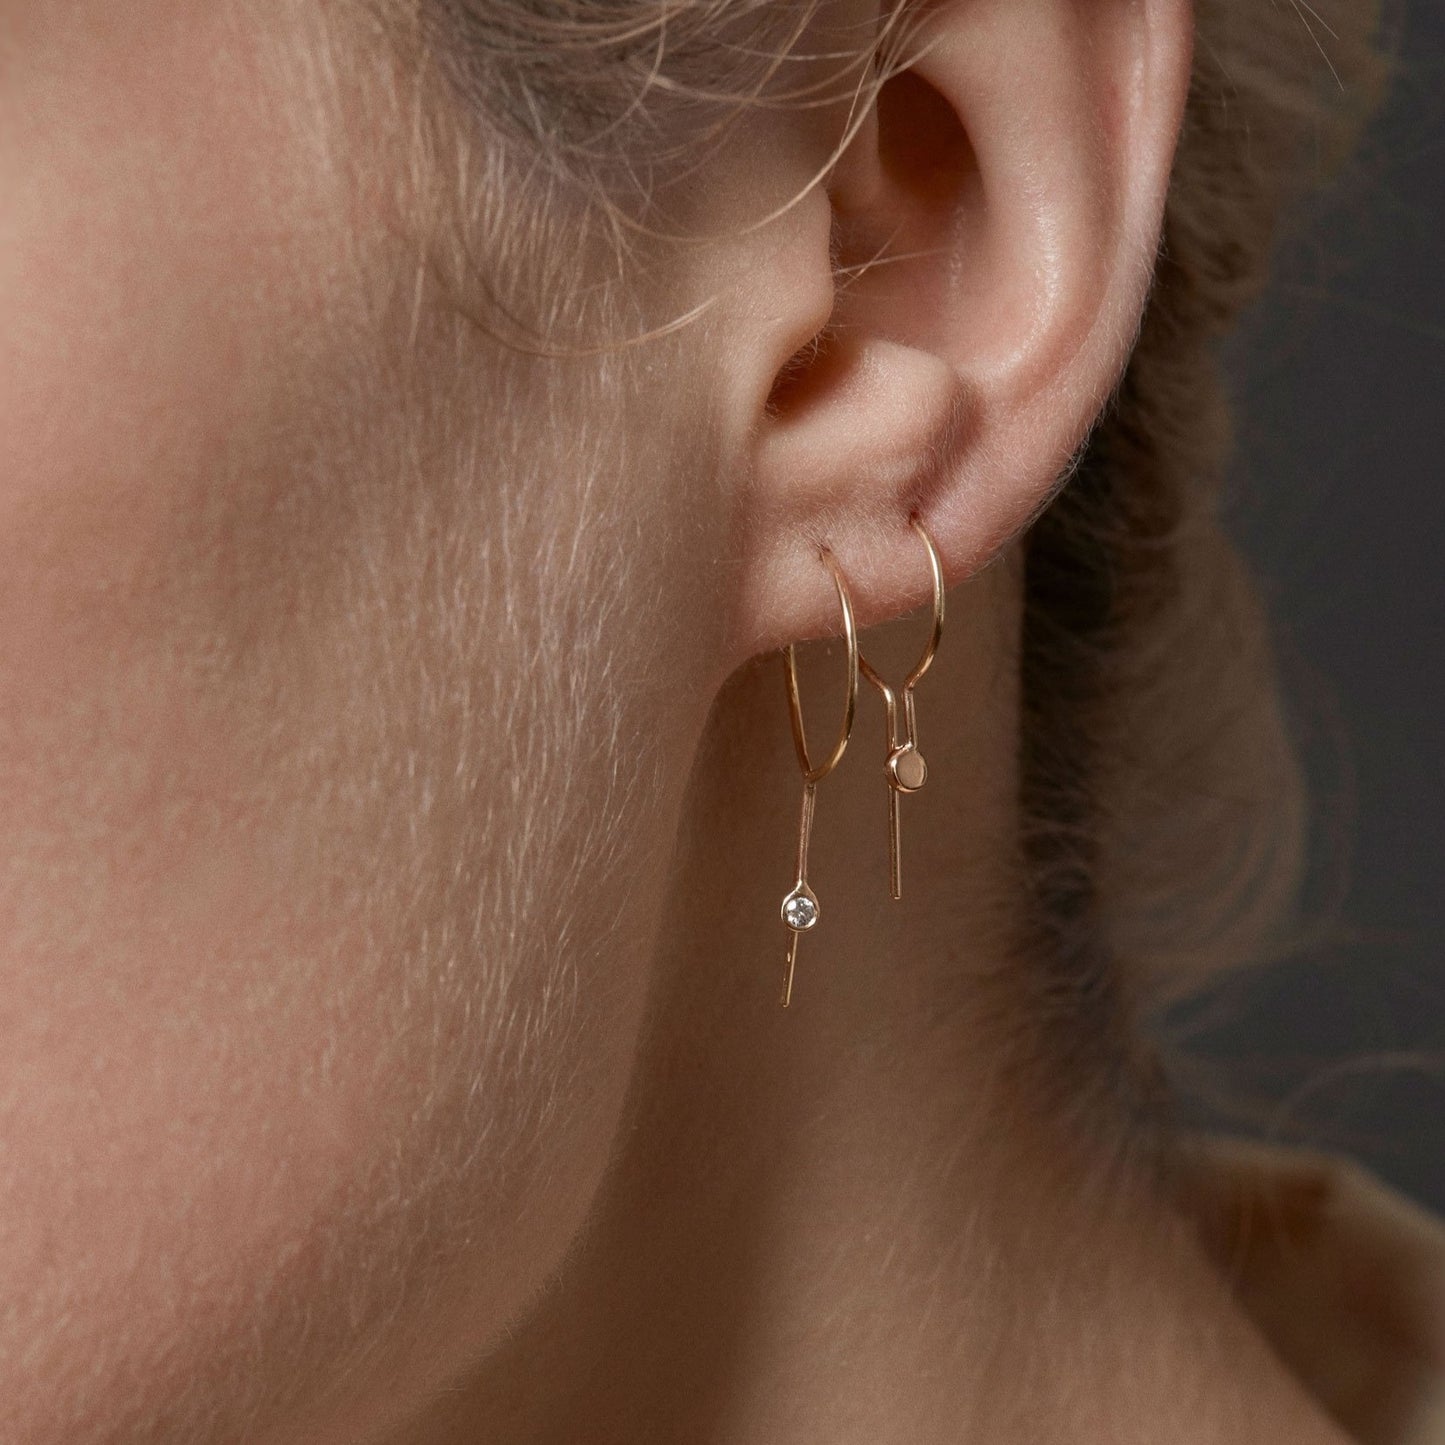 14k gold earrings with diamond. 